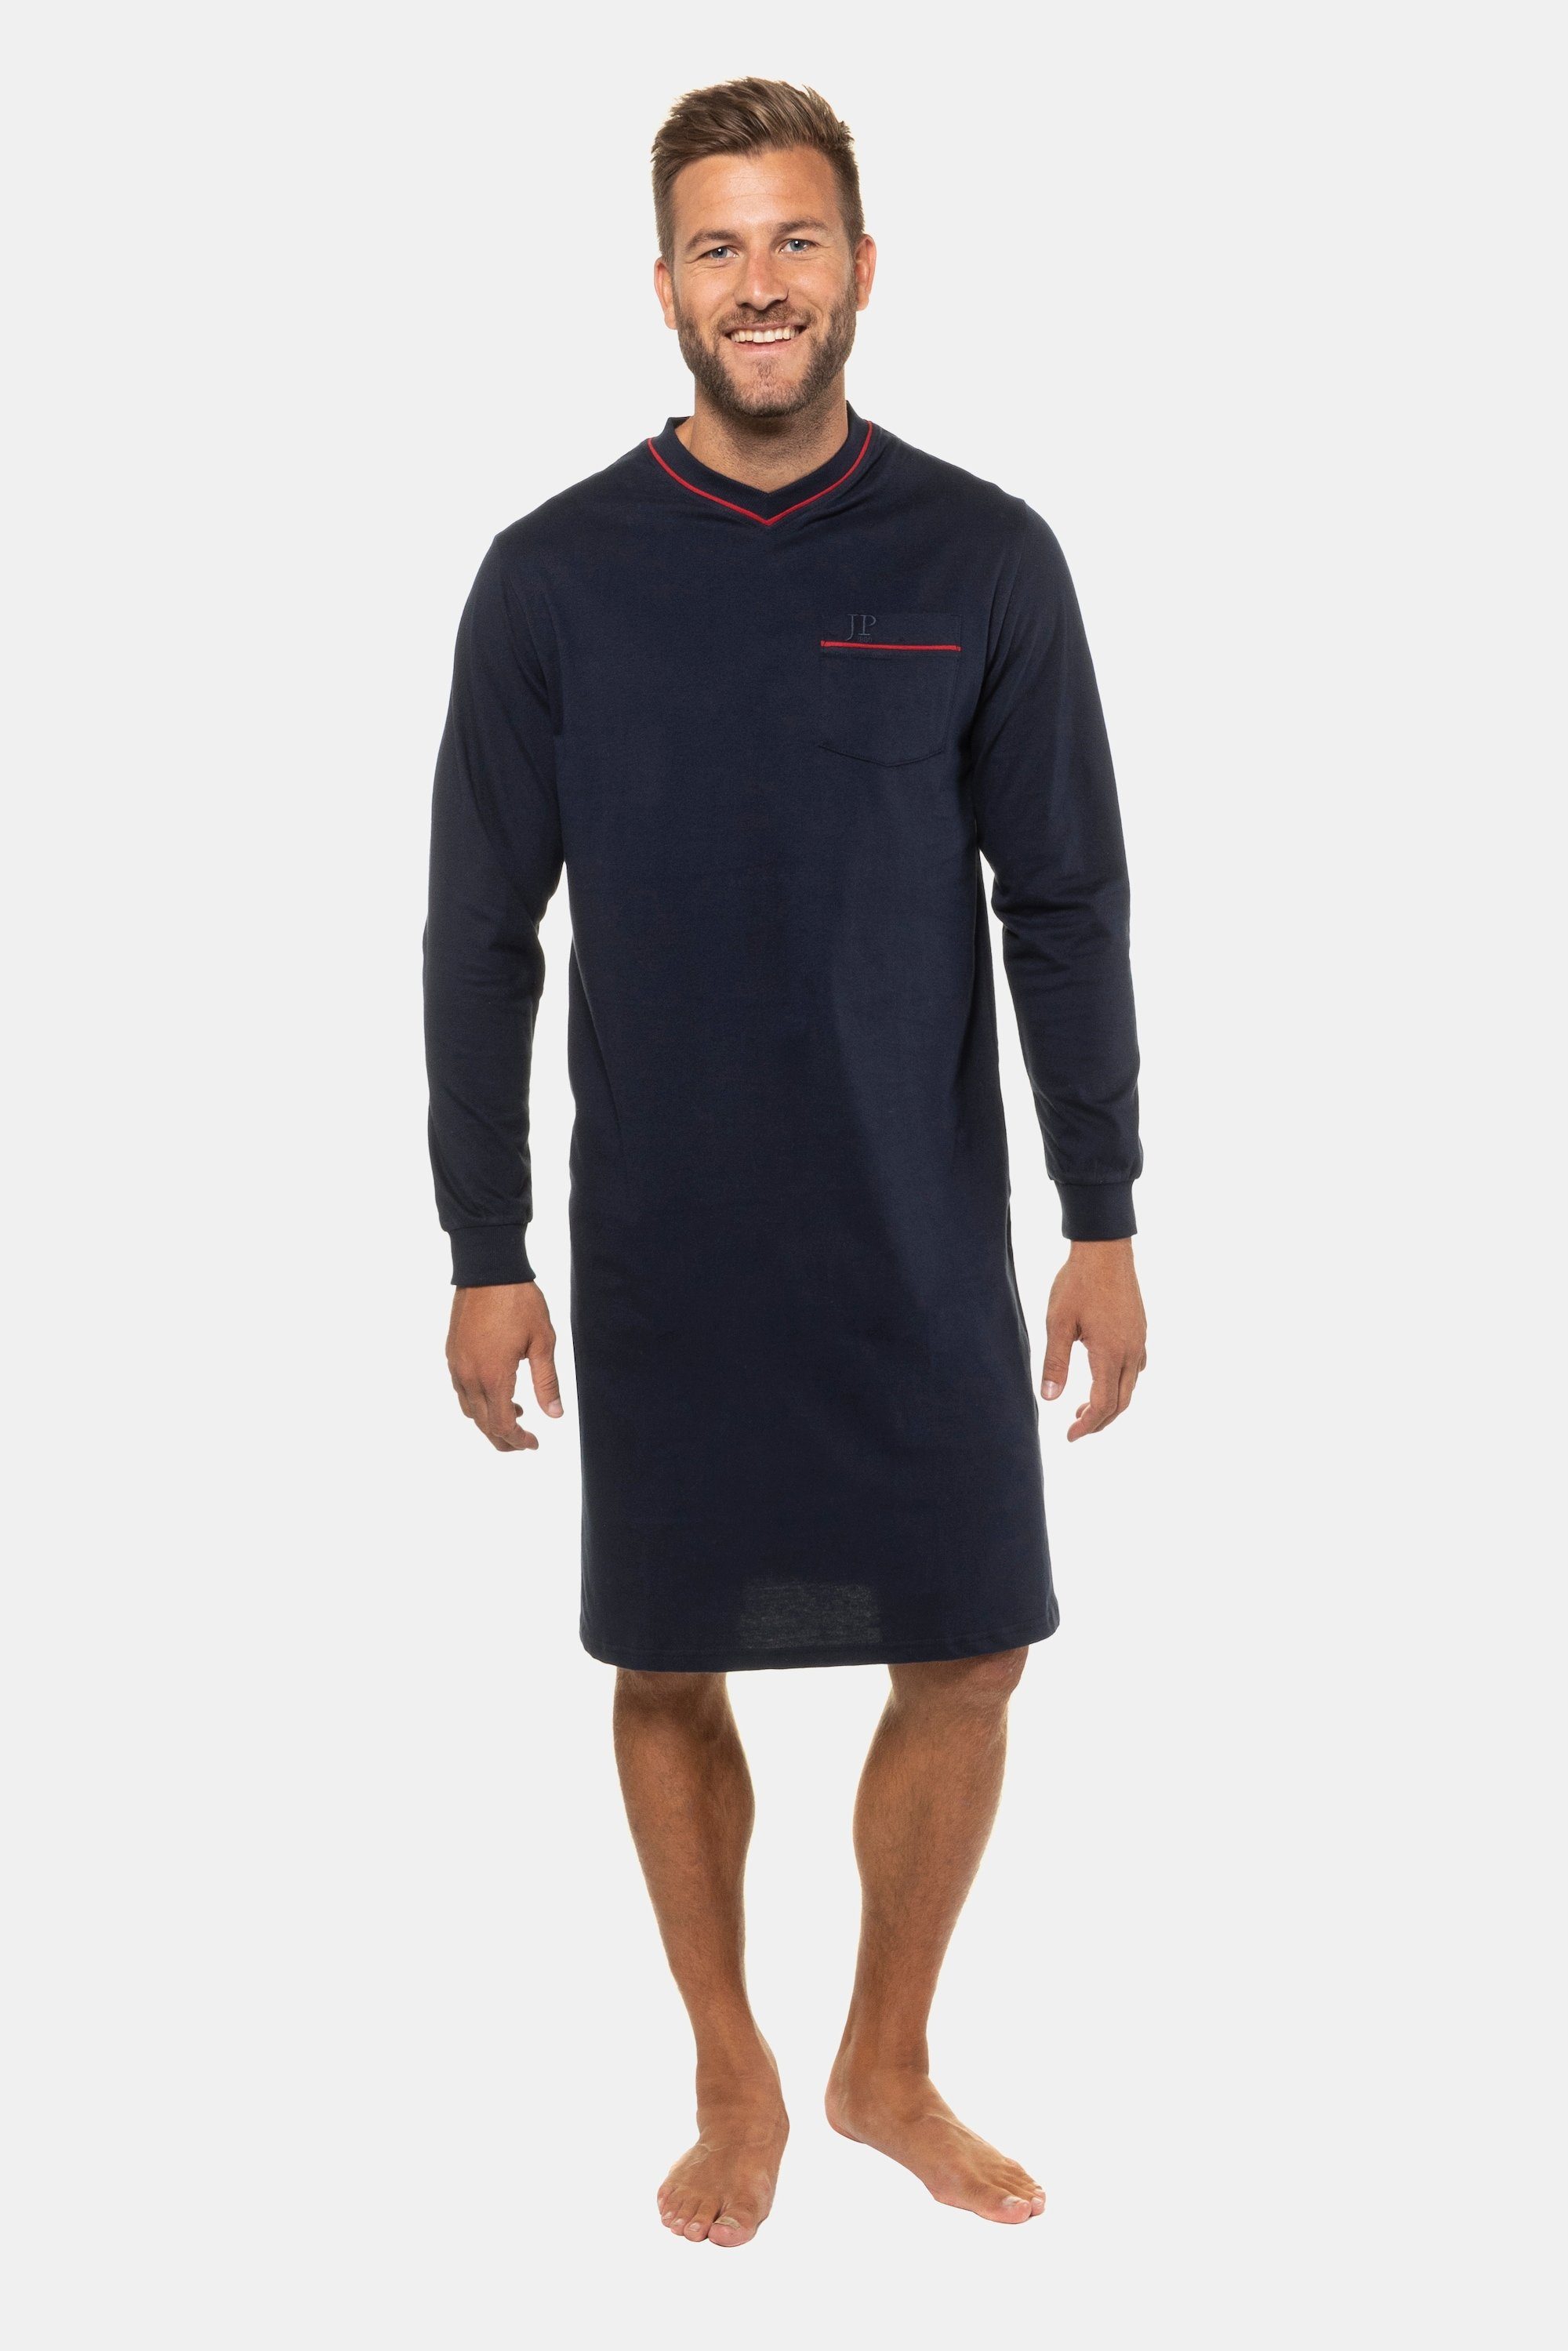 dunkel Langarm Schlafanzug Homewear JP1880 uni Nachthemd marine Gr 8XL bis